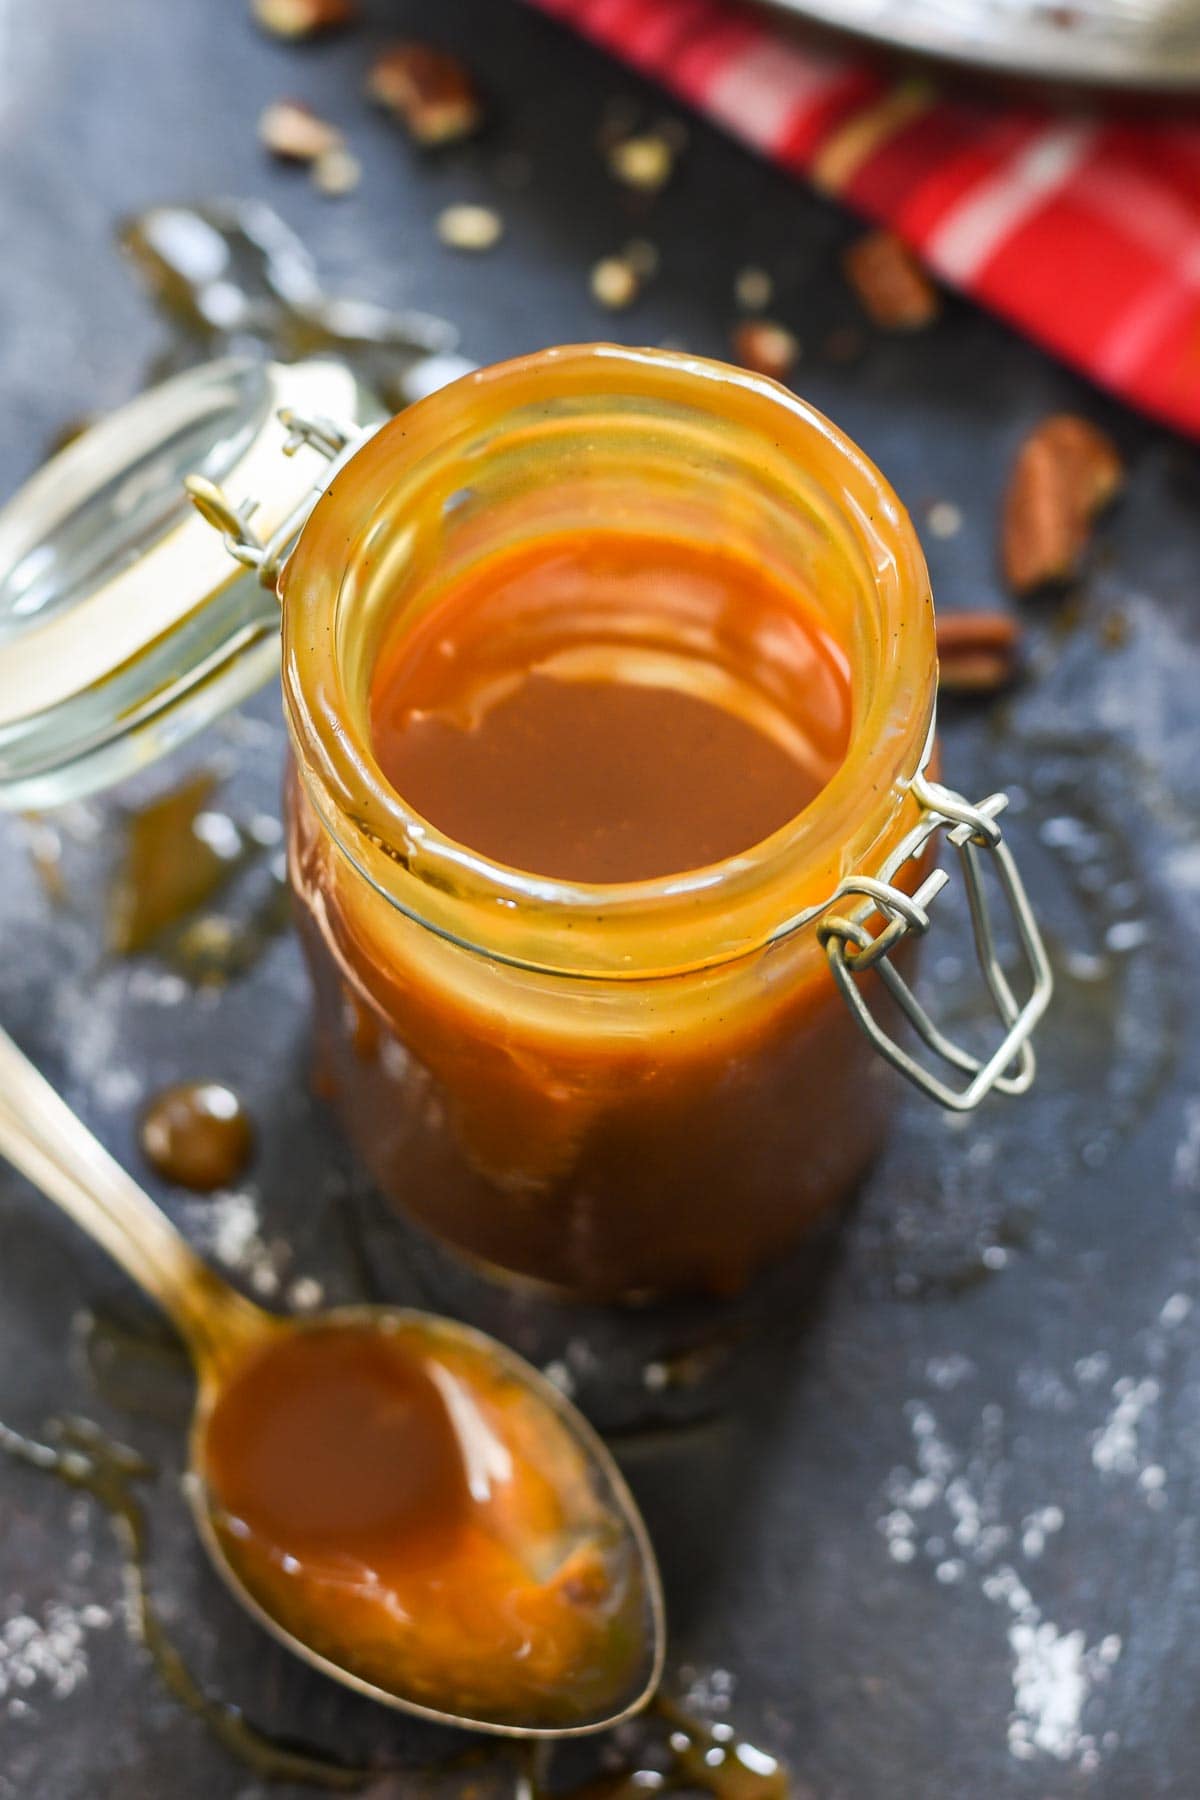 a jar of homemade caramel sauce with a spoon beside